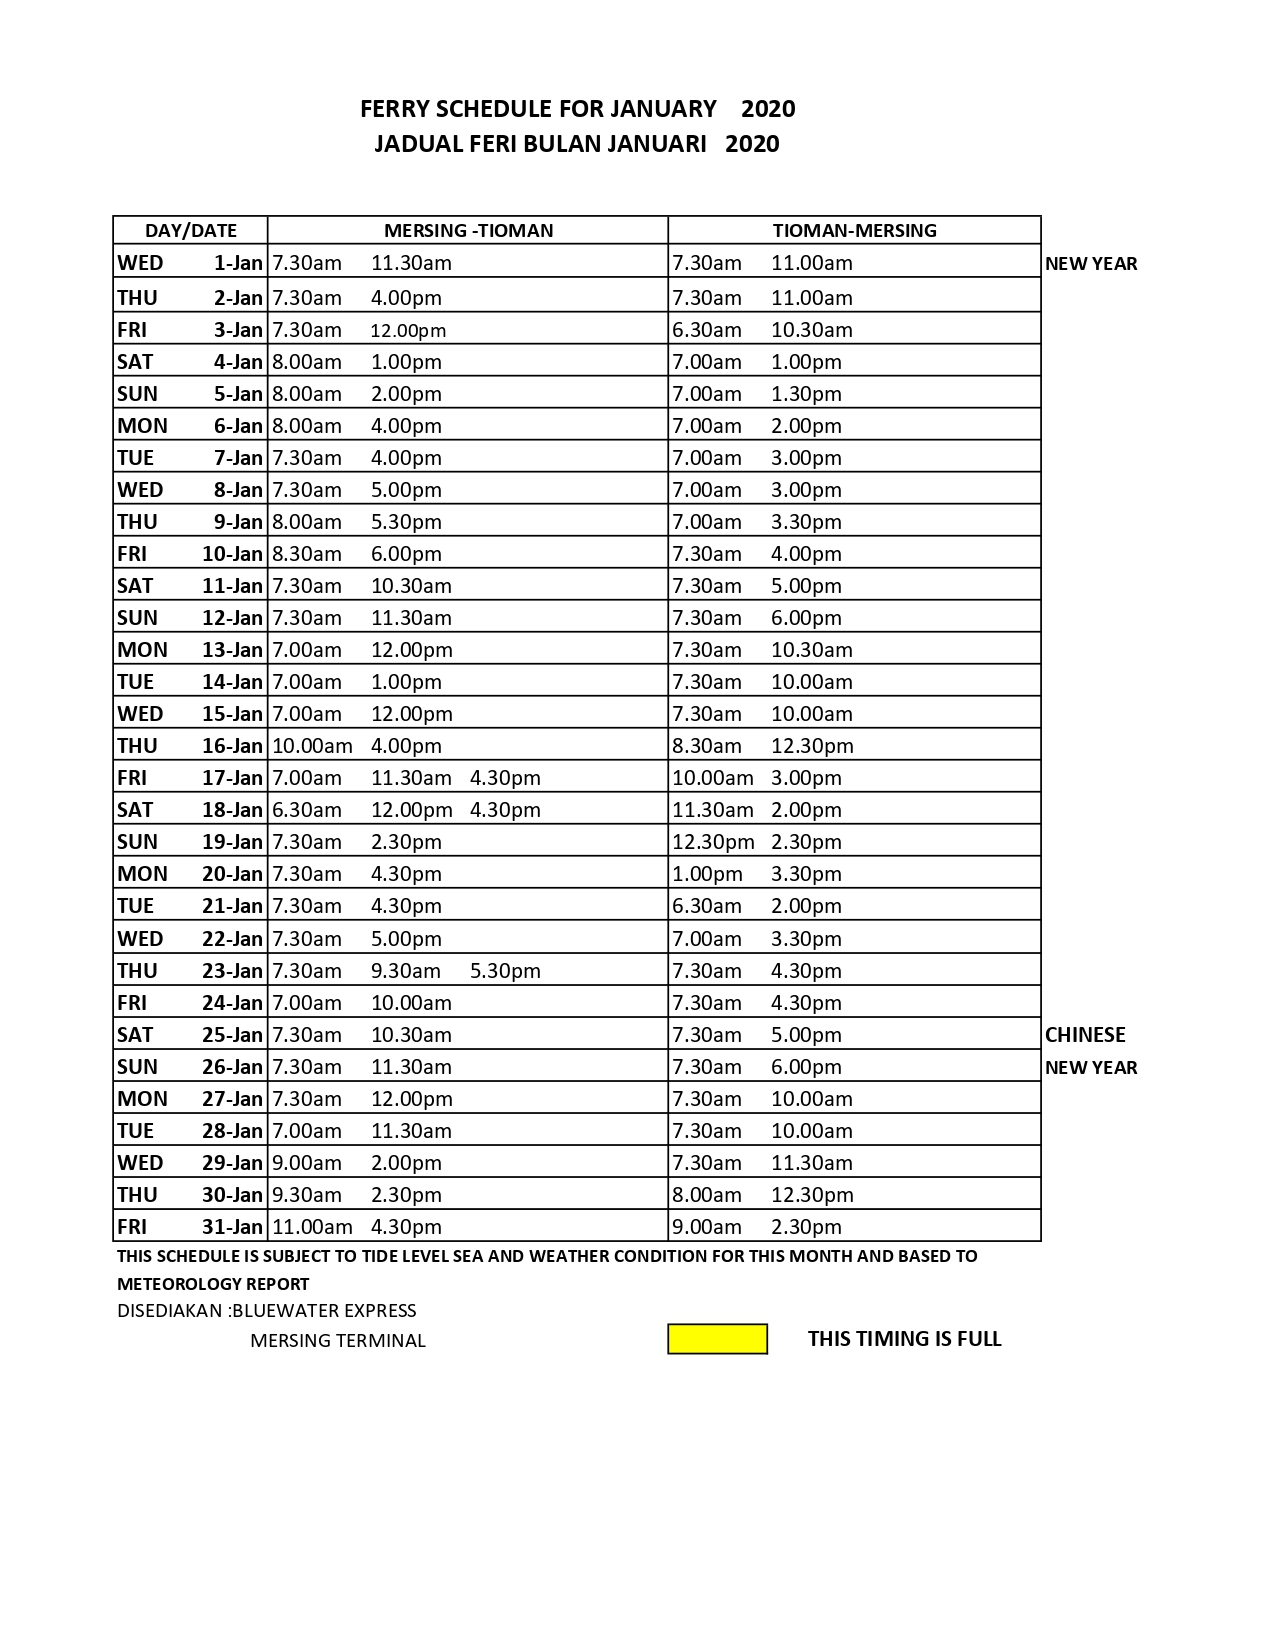 Mersing-Tioman Ferry Schedule January 2020